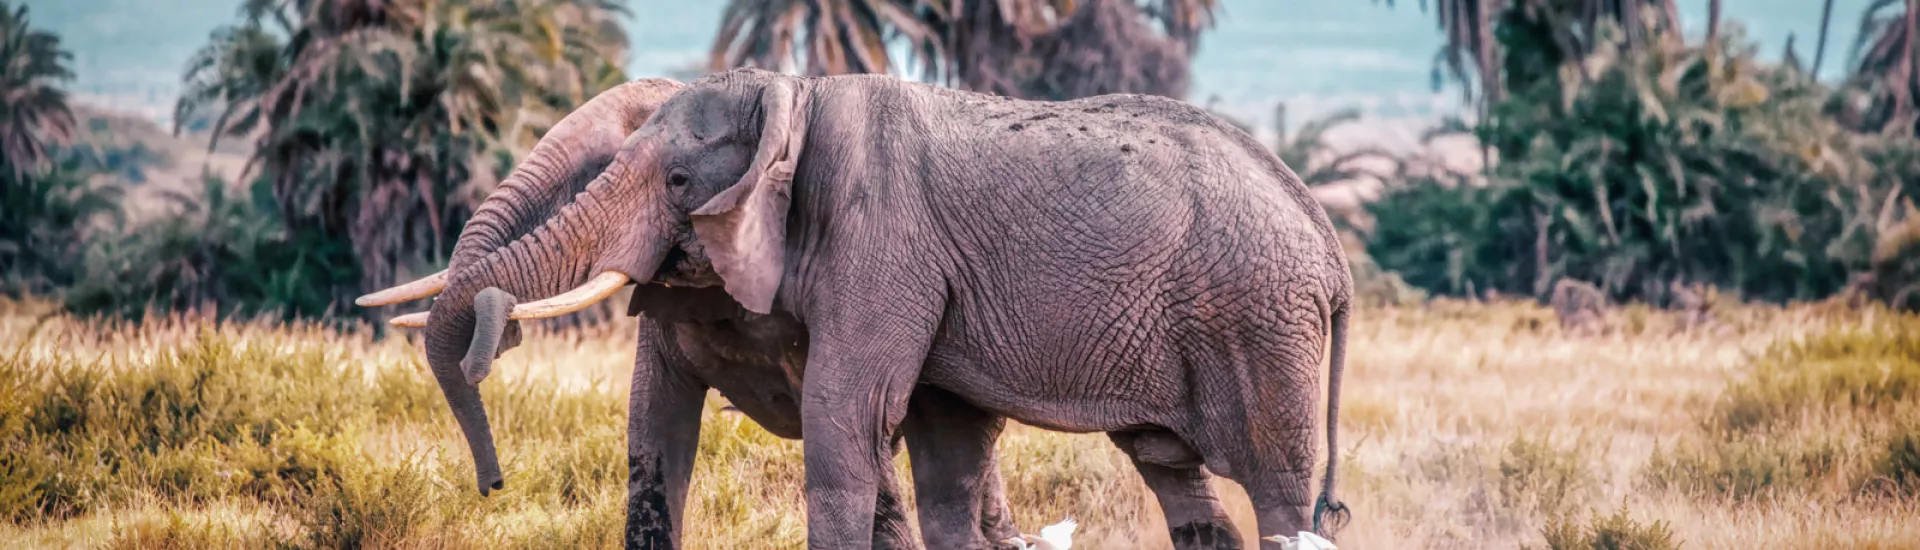 Elefanten bei einer Safari in Kenia beobachten